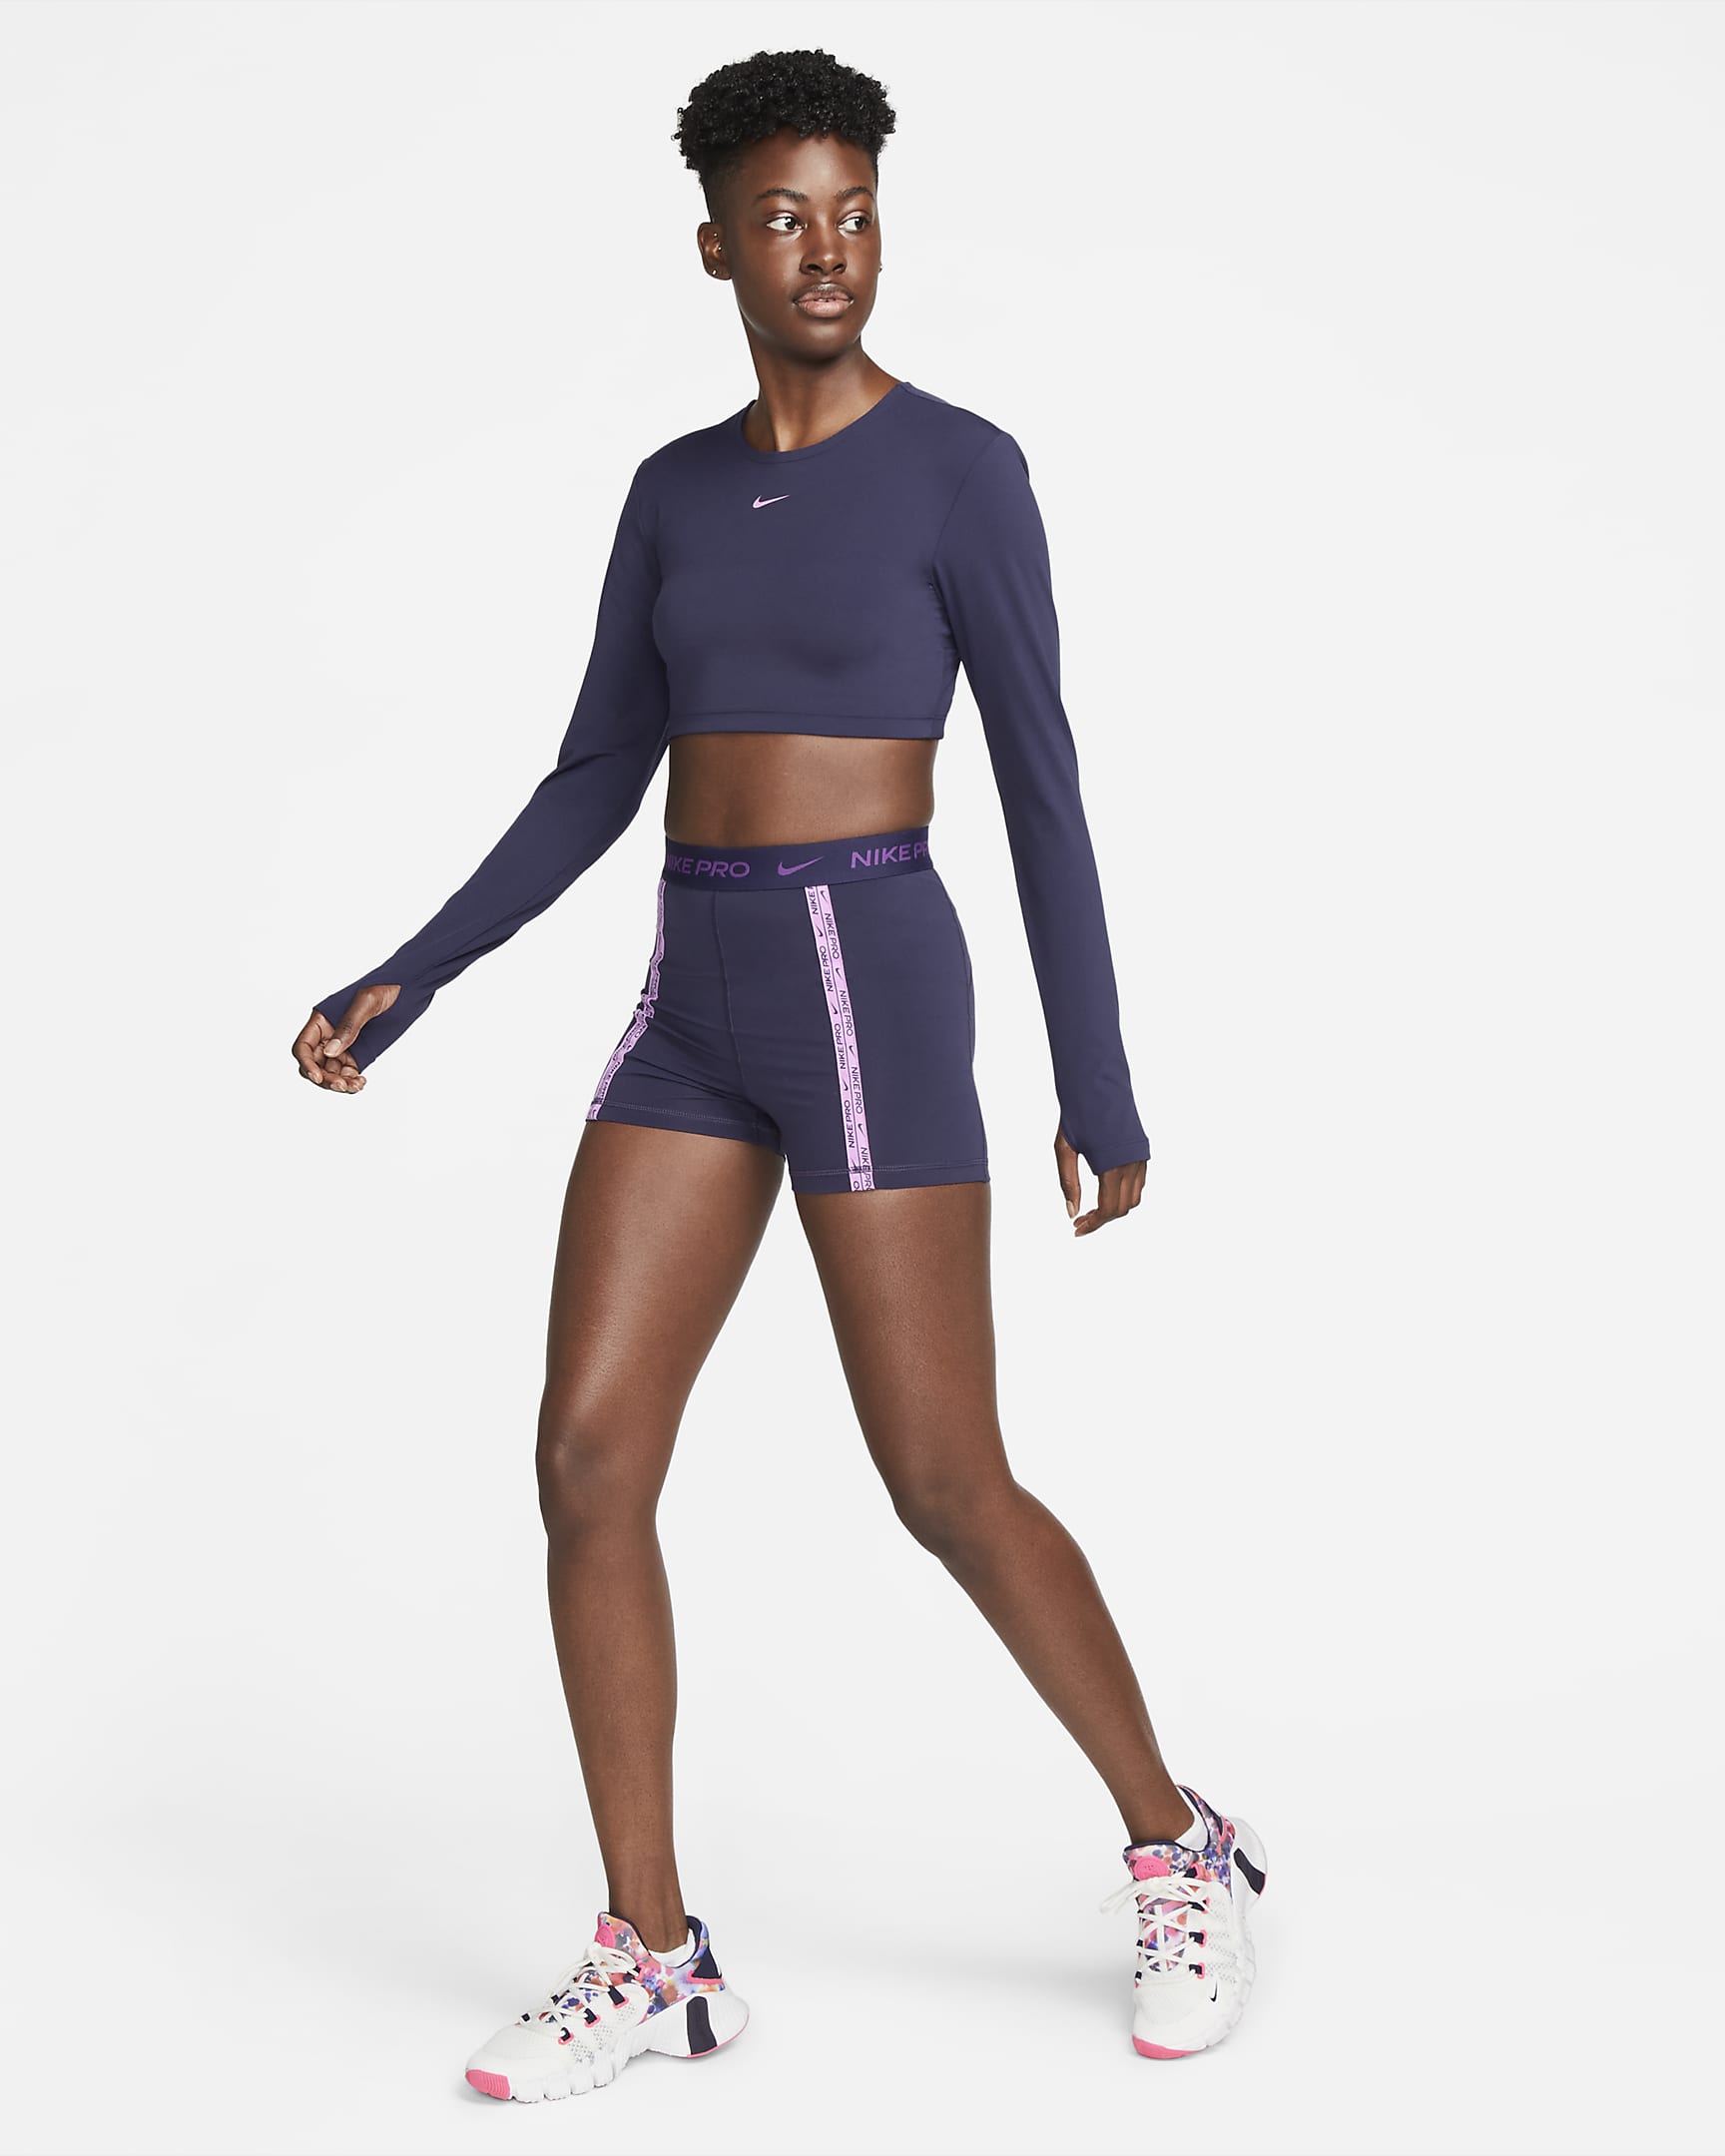 Nike Pro Dri-FIT Women's Cropped Long-Sleeve Top. Nike.com